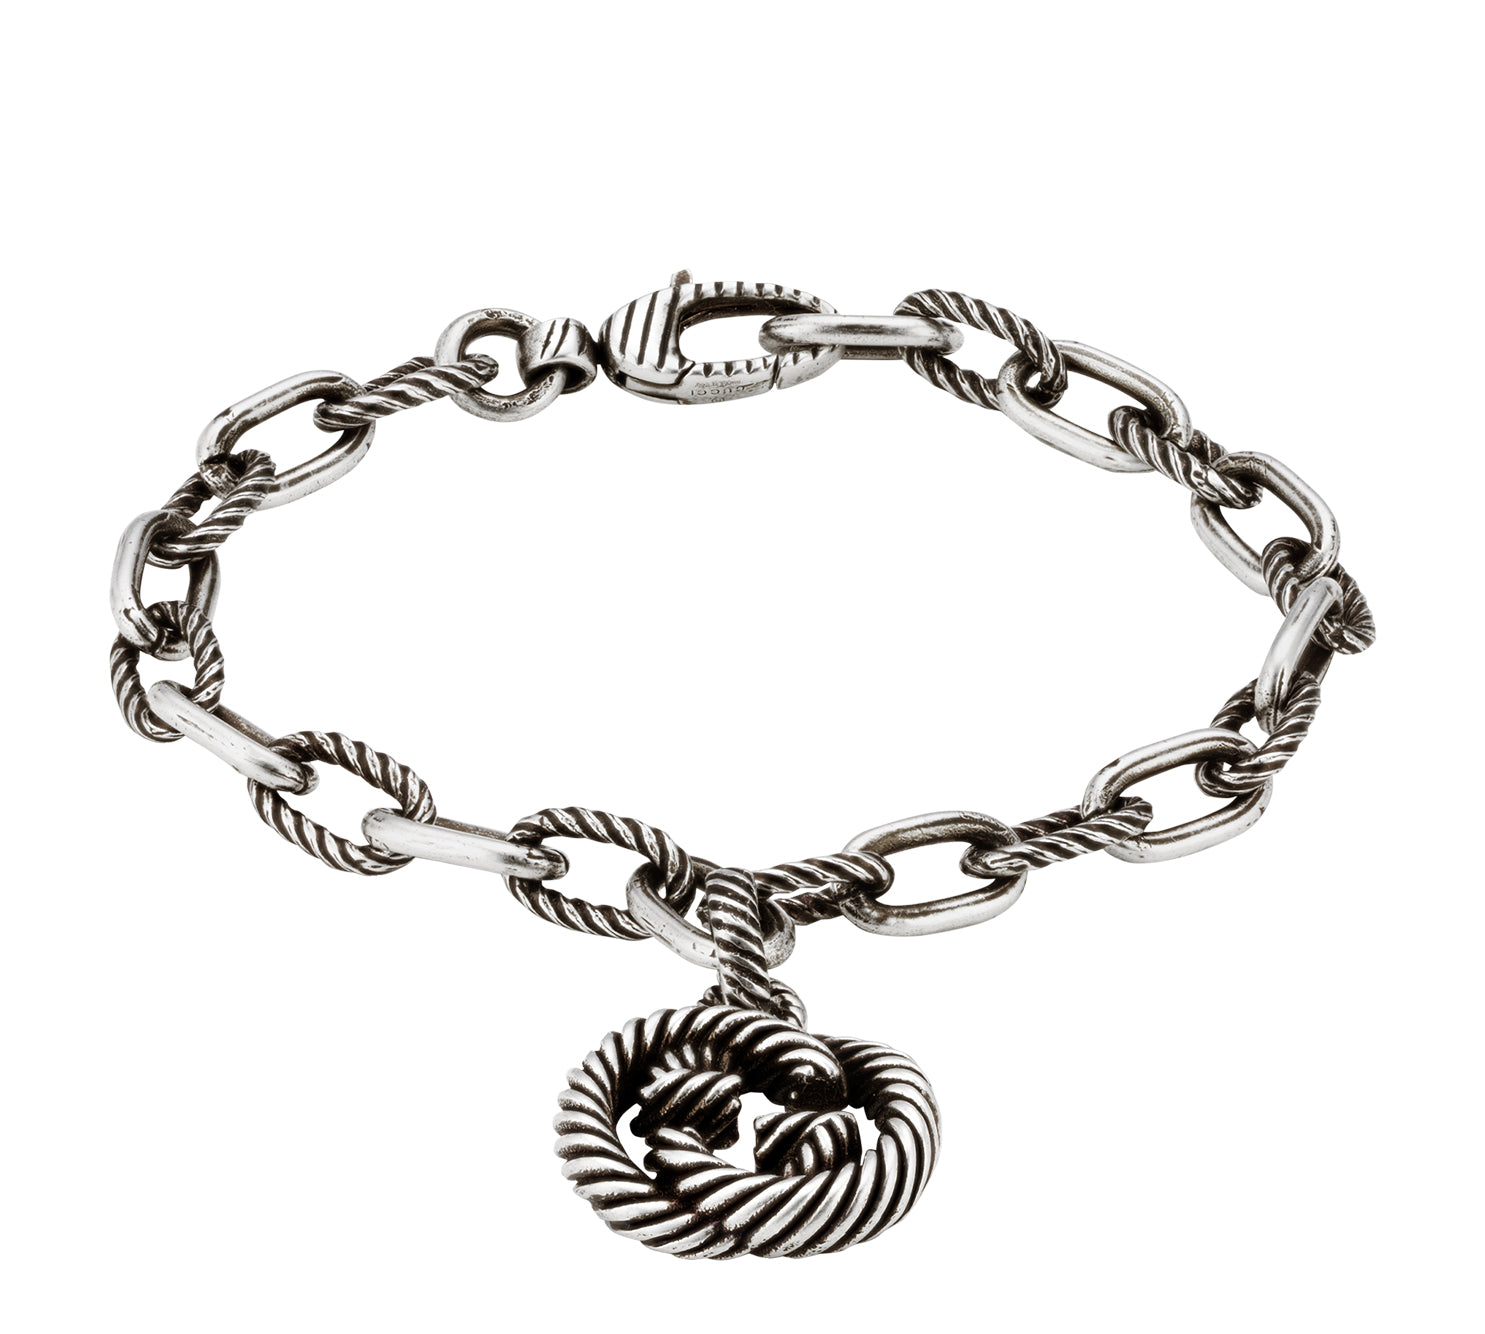 Interlocking G Charm Bracelet in Sterling Silver